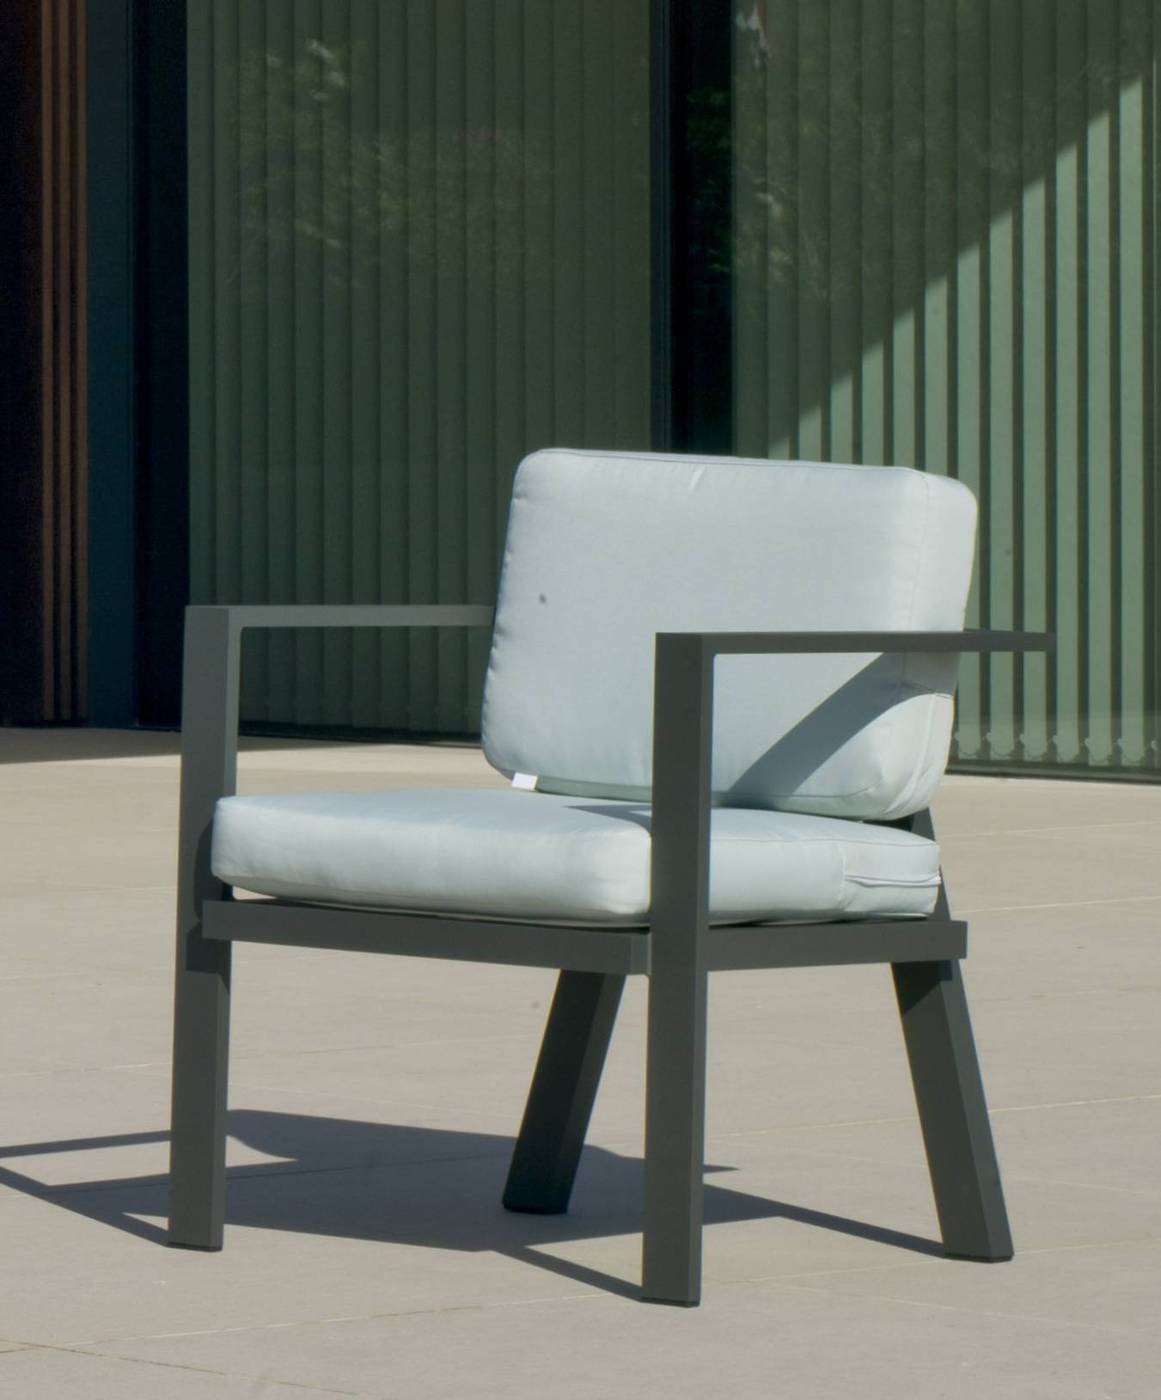 Conjunto Aluminio Luxe Azores-8 - Conjunto de aluminio luxe: 1 sofá de 3 plazas + 2 sillones + 1 mesa de centro. Disponible en color blanco, antracita, champagne, plata o marrón.